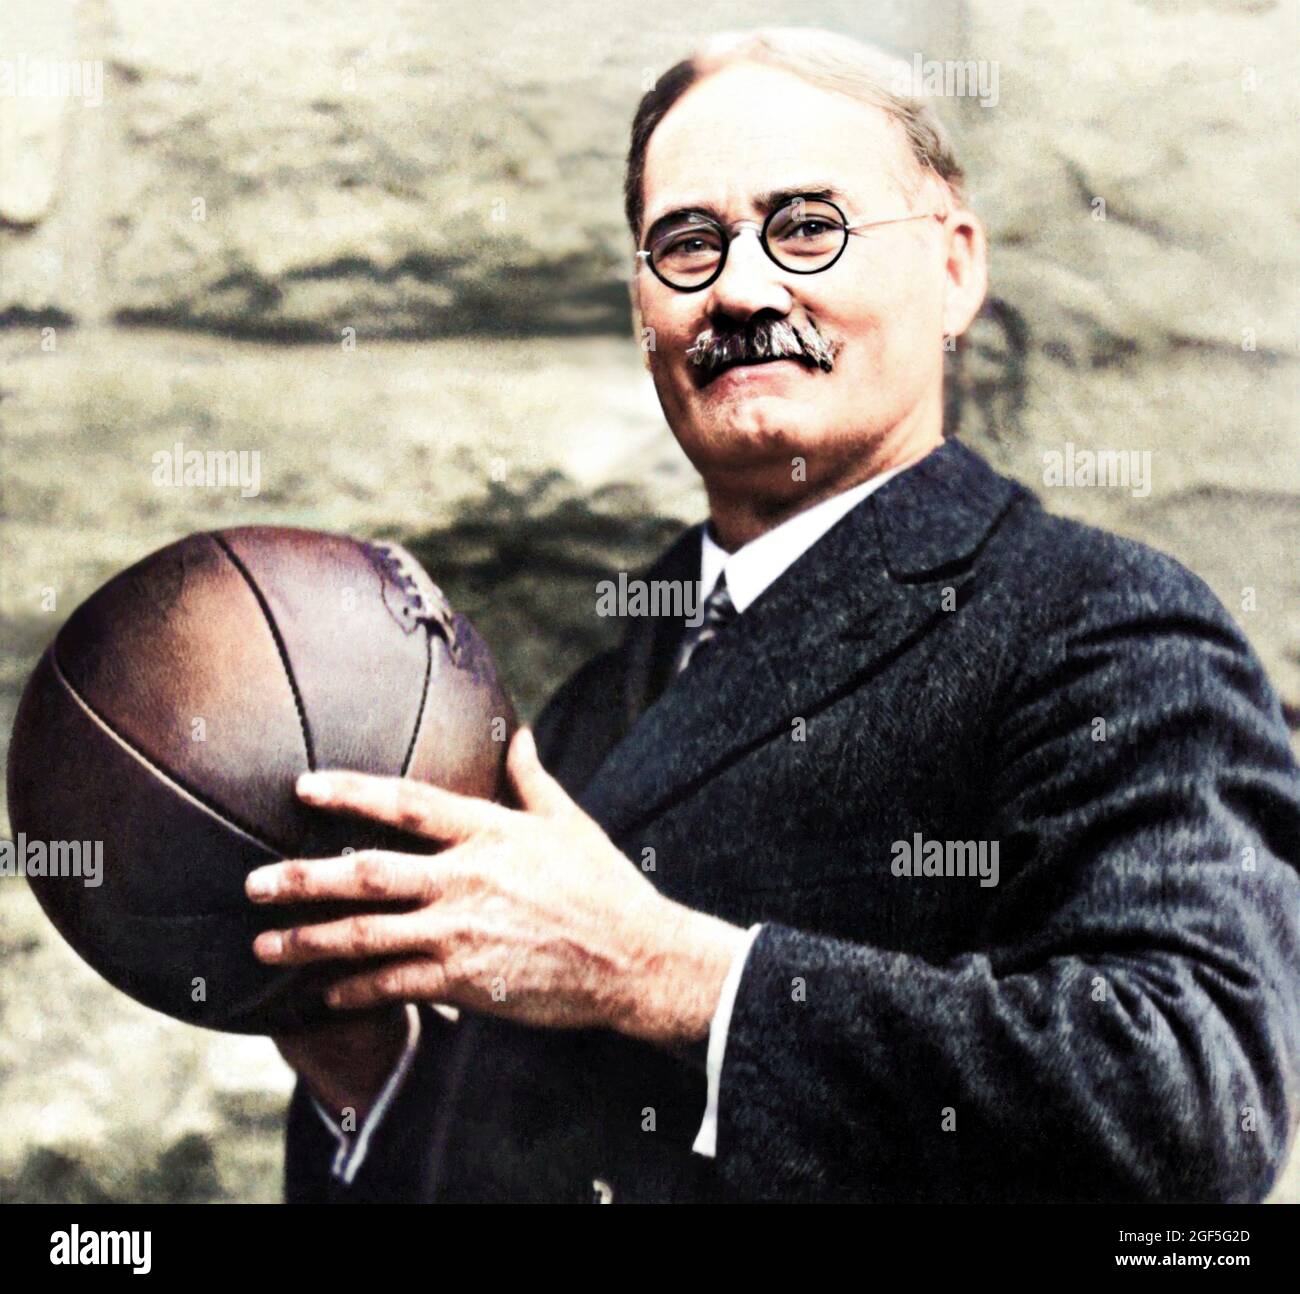 1930 ca , USA : The american Doctor JAMES A. NAISMITH ( 1861 - 1939 ), born-canadian, inventor of BASKETBALL sport . he wrote the original basketball rule book and founded the University of Kansas basketballs program . Unknown photographer . DIGITALLY COLORIZED . - BASKET - JIM THE DOC - SPORT  -  PALLACANESTRO - INVENTORE - INVENZIONE - INVENTION - DISCIPLINA SPORTIVA - Dottore - HISTORY - FOTO STORICHE - PORTRAIT - RITRATTO - prato - grass - meadow - palla - ball - cravatta - tie - occhiali da vista - lens ----  Archivio GBB Stock Photo